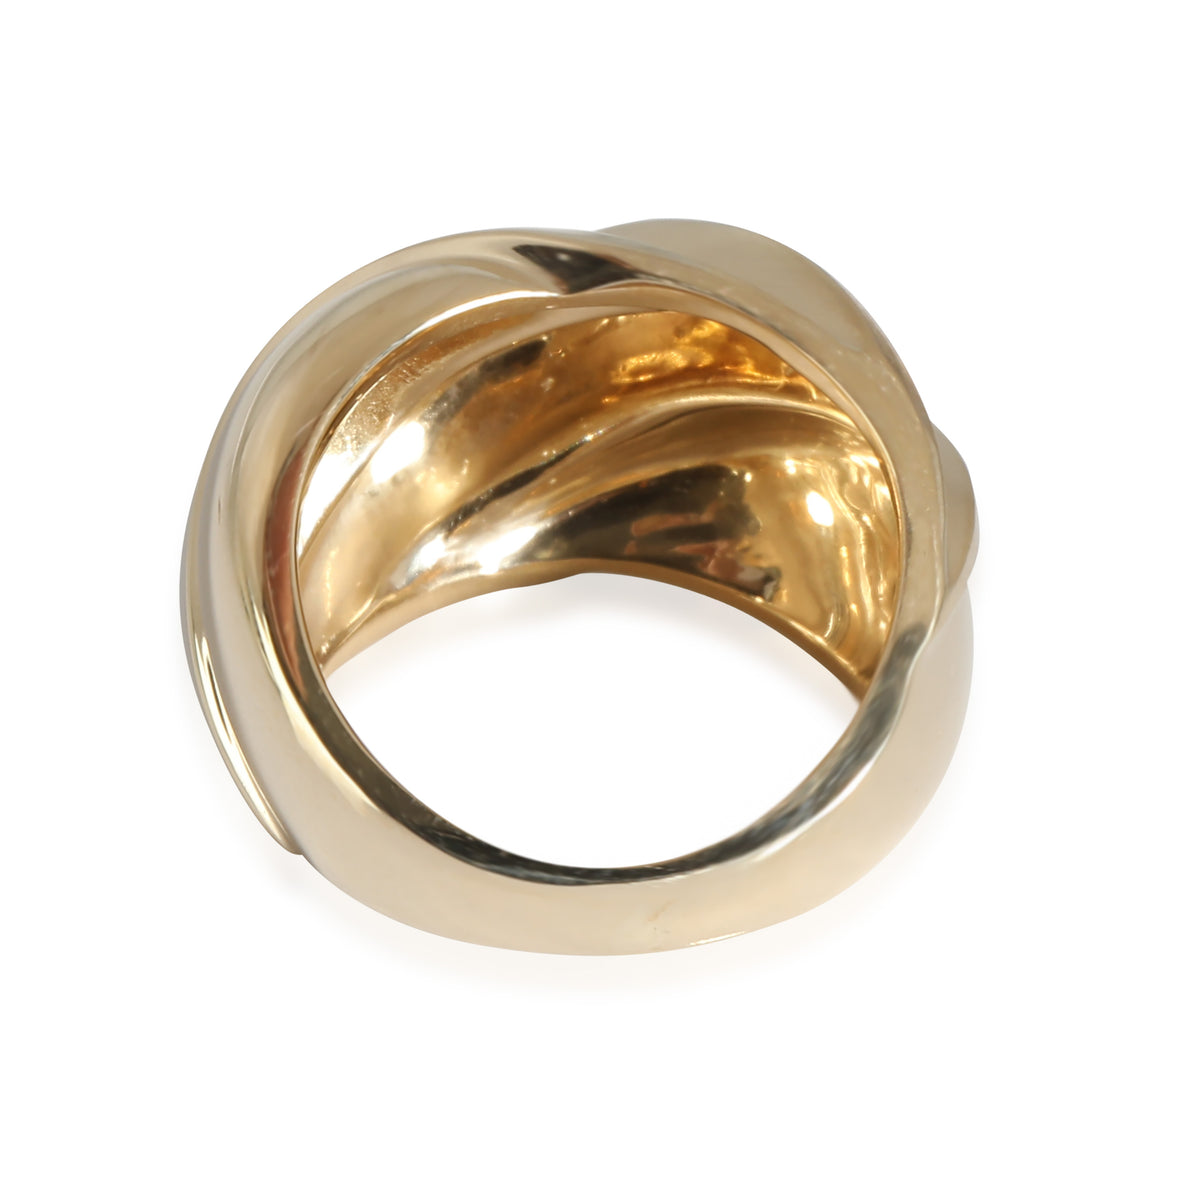 Raised Edge Scalloped Detail Ring in 14K Yellow Gold